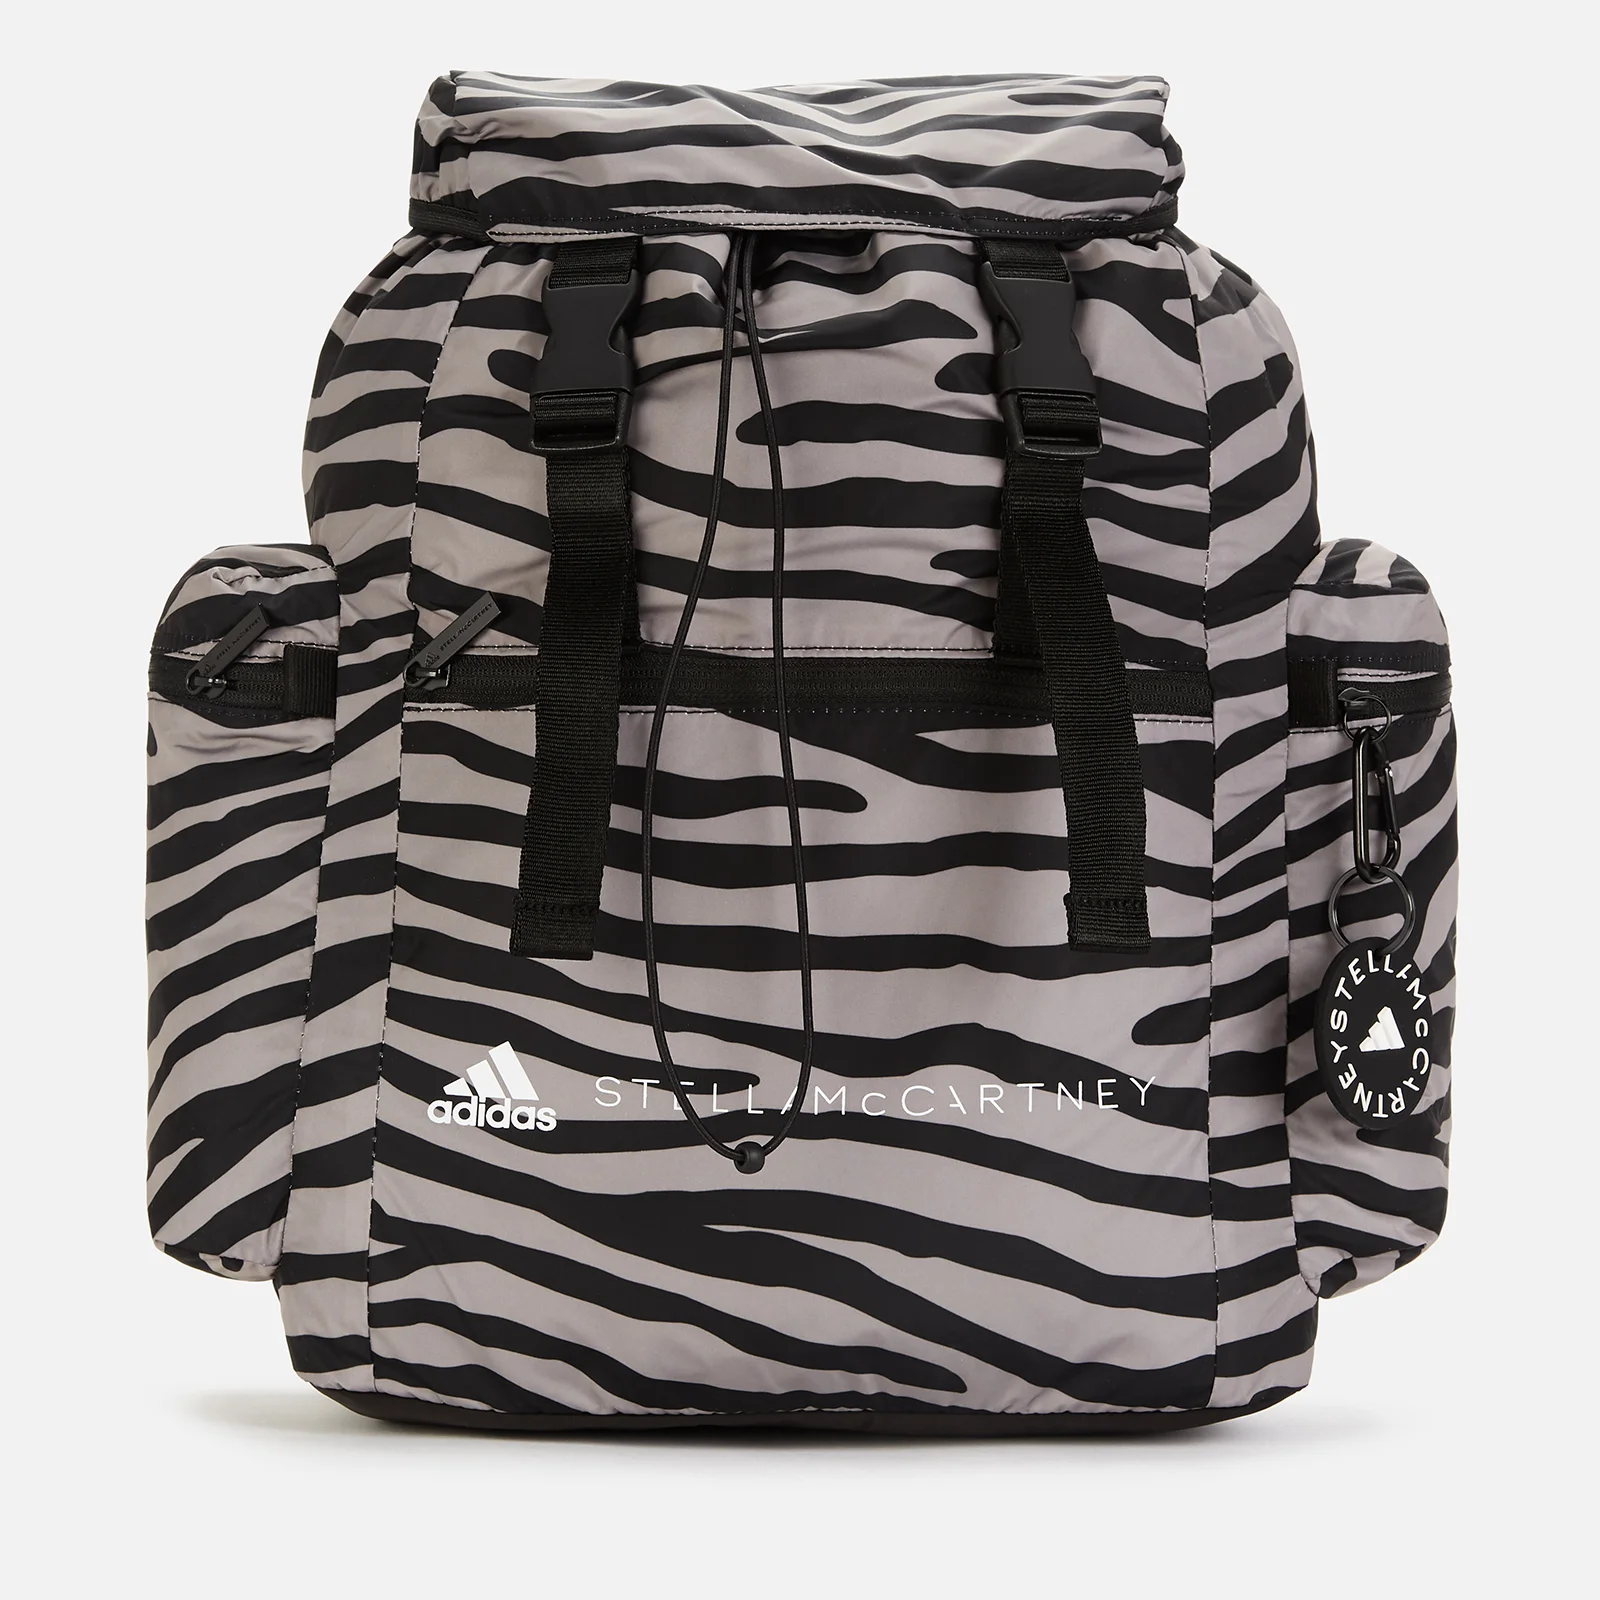 adidas by Stella McCartney Women's ASMC Backpack - Black/Dovgry/White Image 1